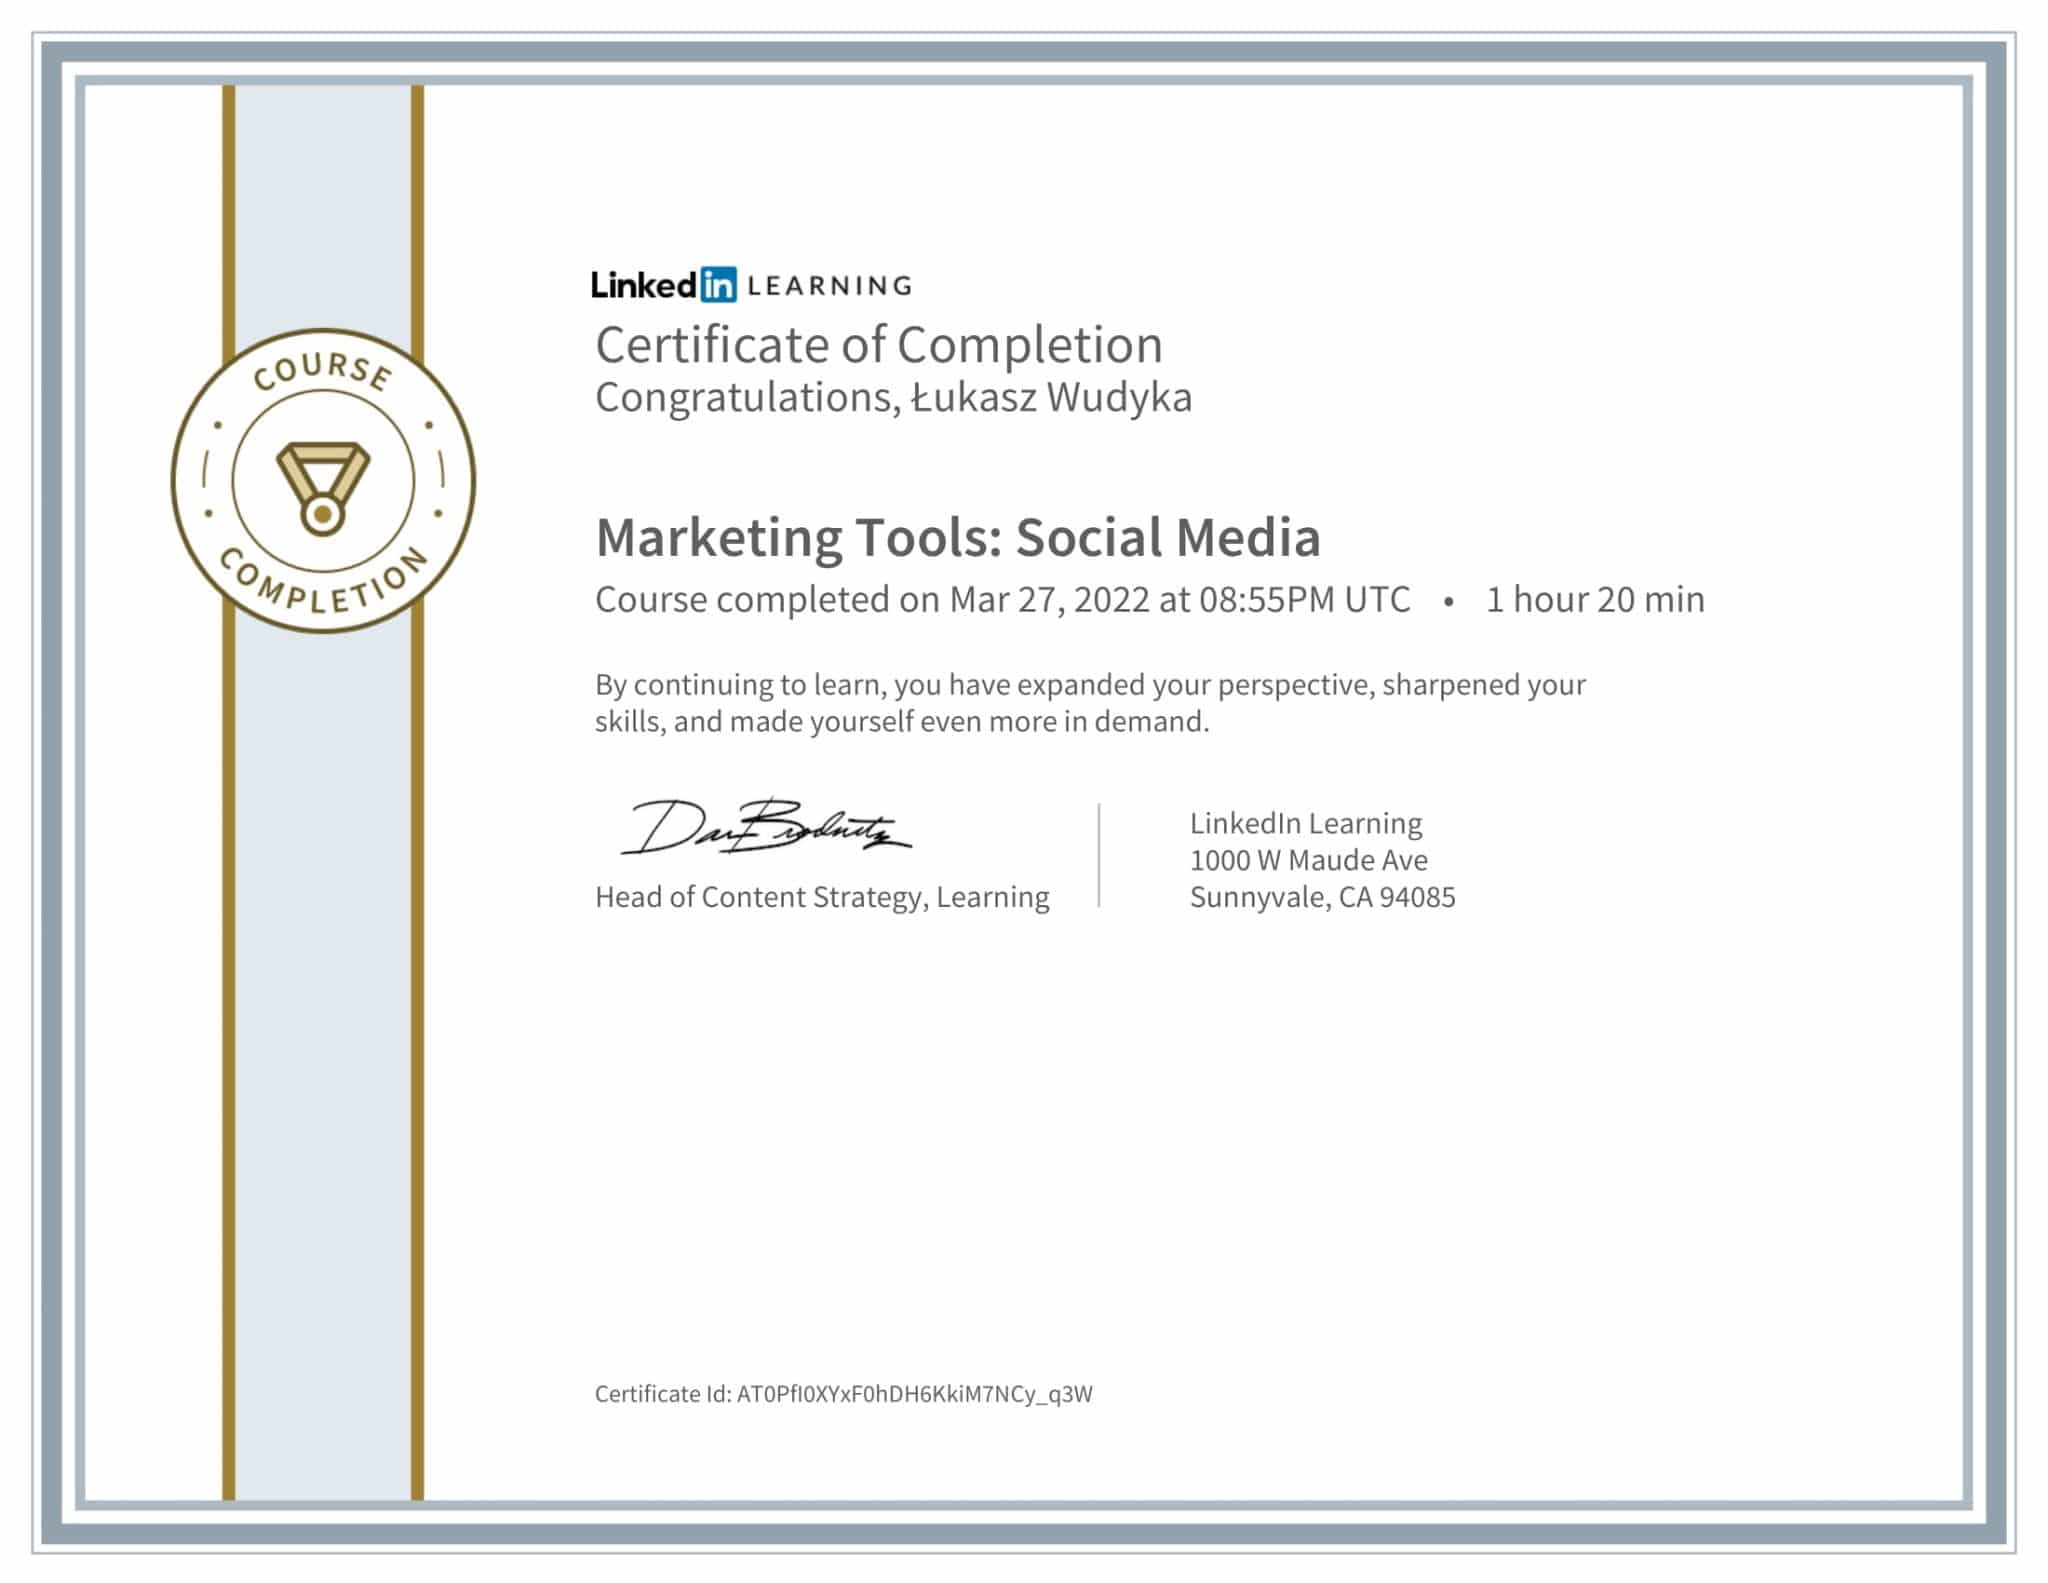 CertificateOfCompletion_Marketing Tools Social Media-1